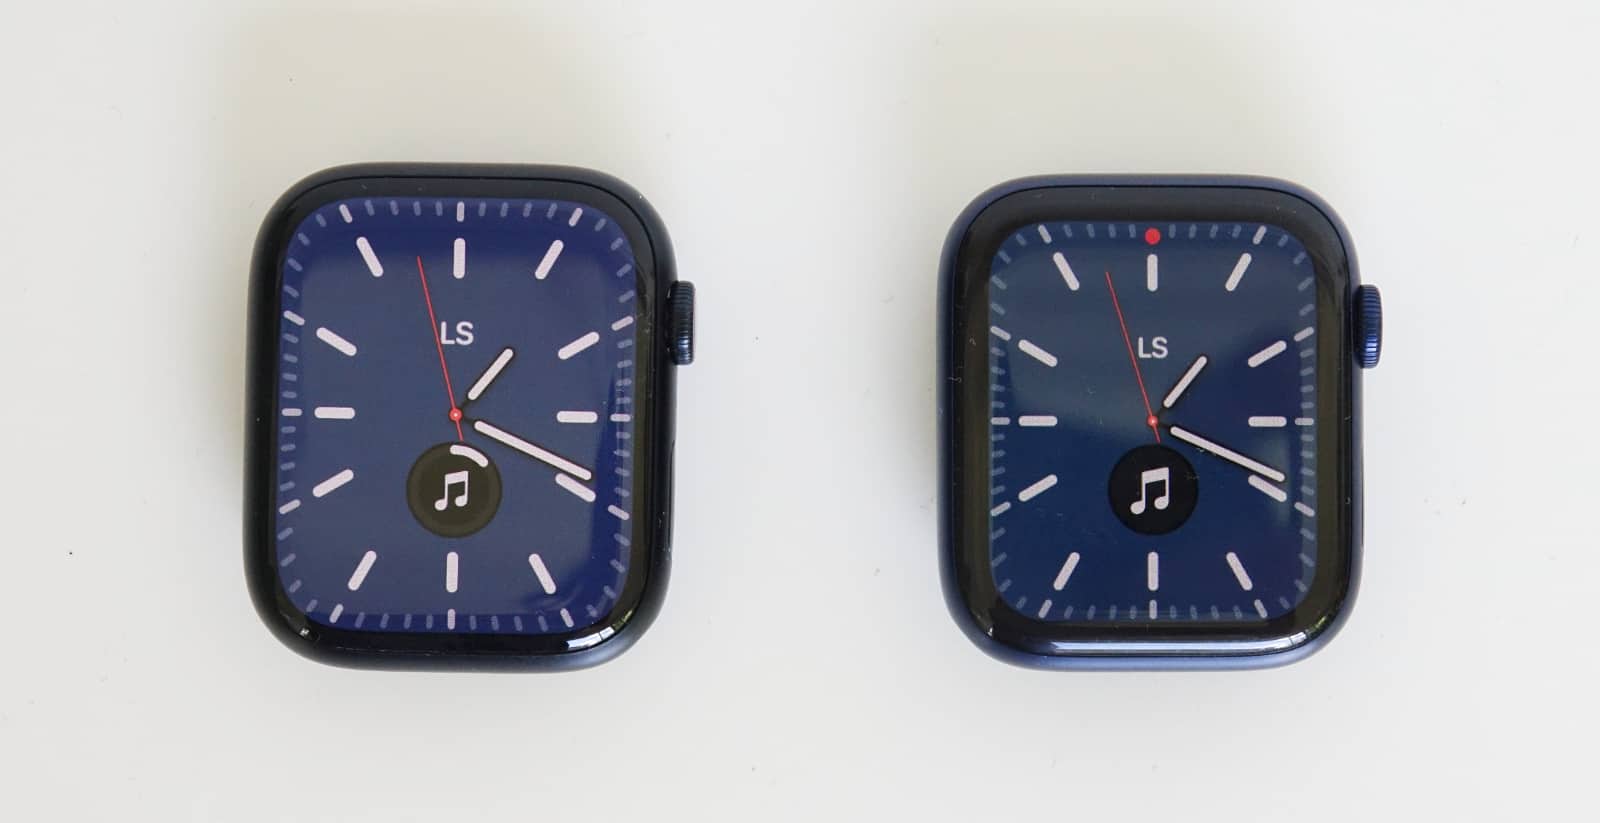 Apple Watch Series 7 (left) versus Apple Watch Series 6 (right)